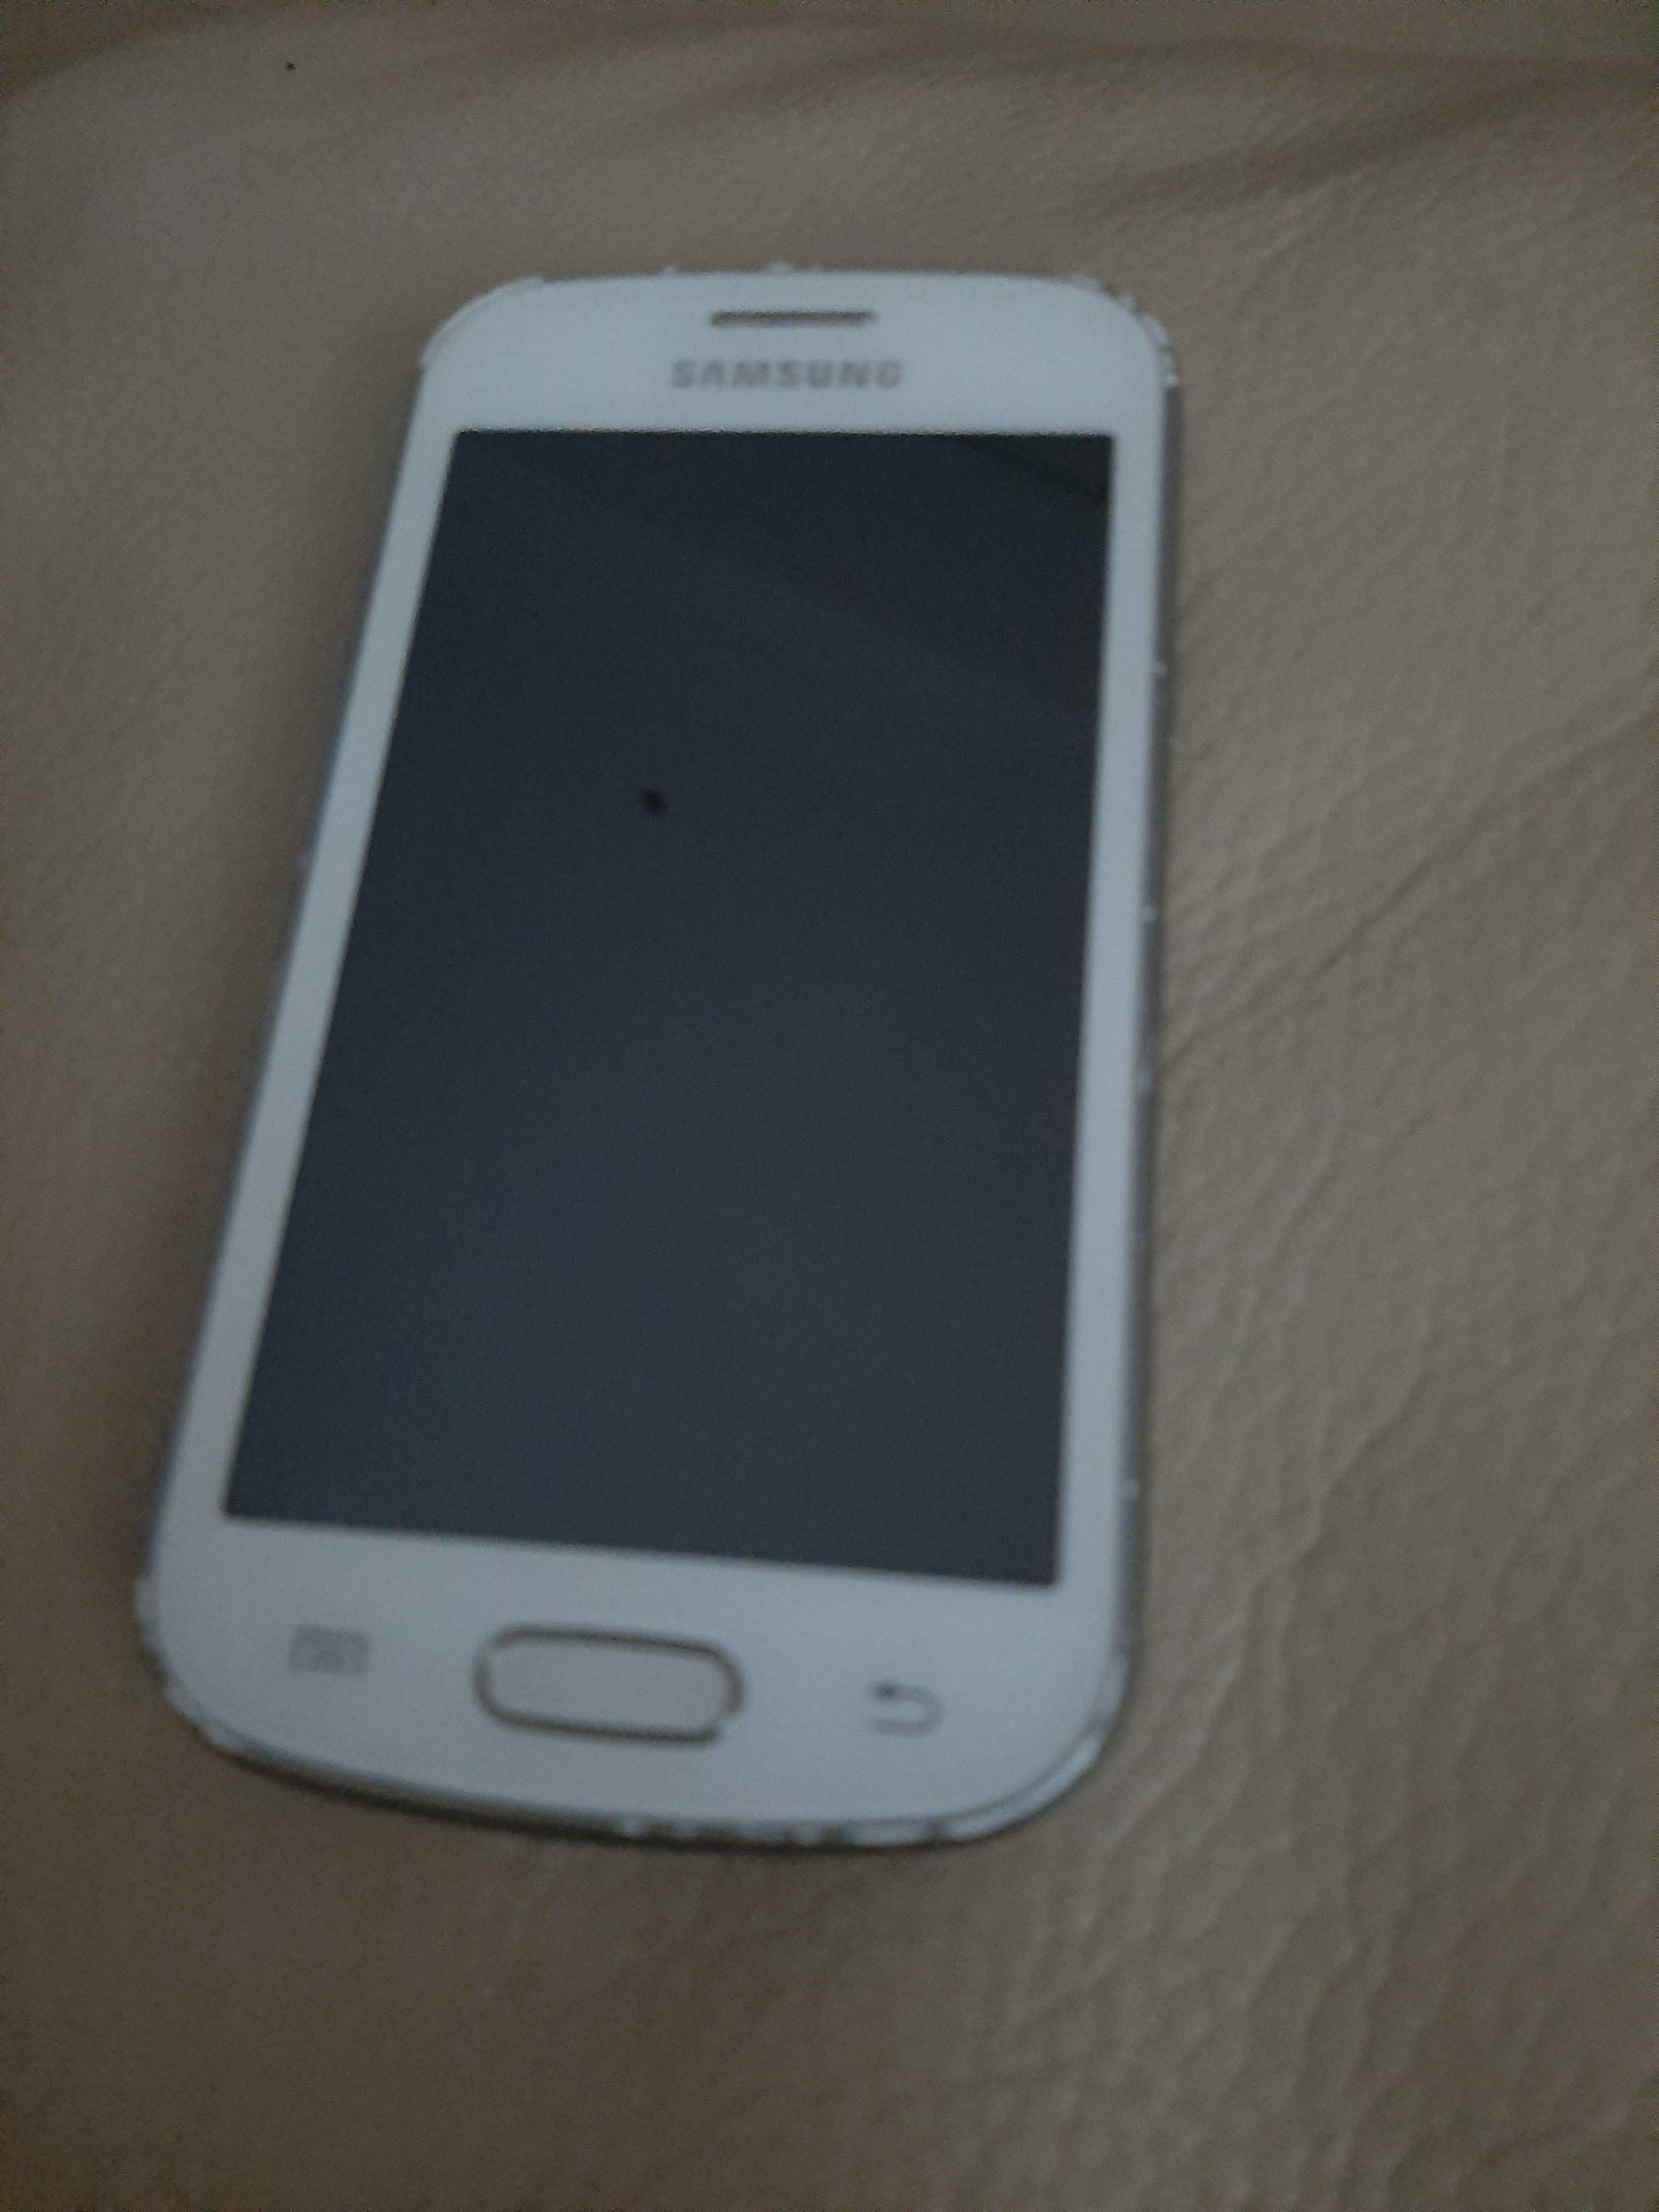 Telemóvel Samsung desbloqueado